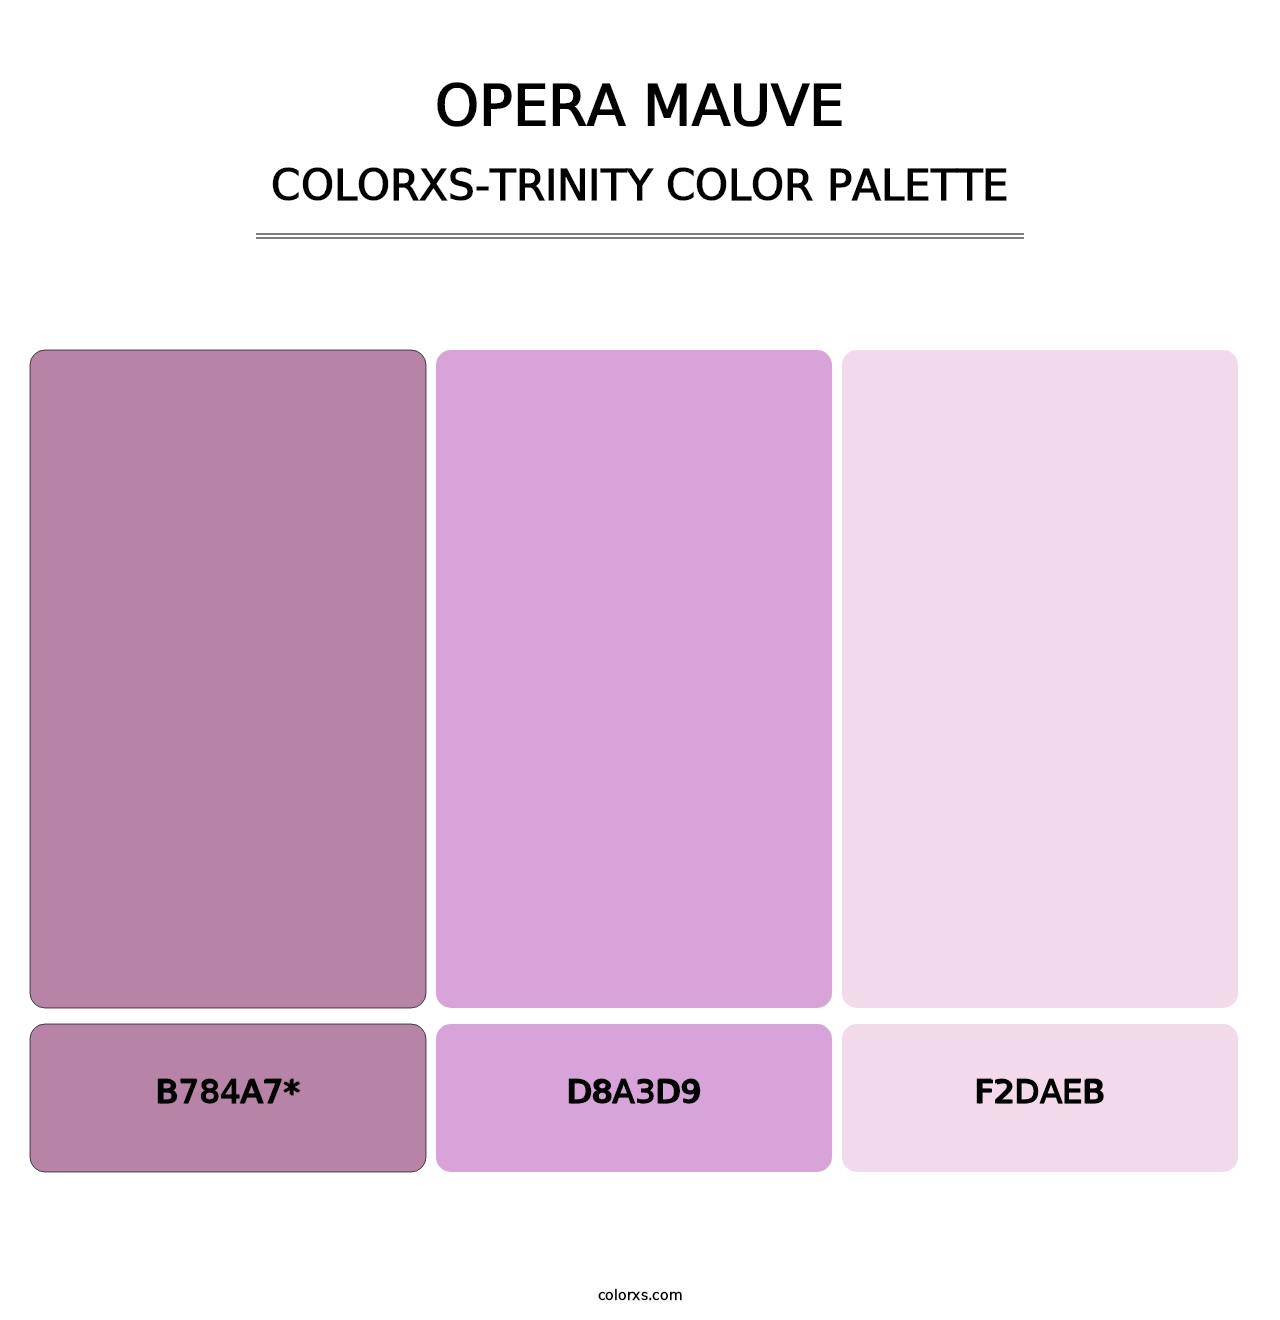 Opera Mauve - Colorxs Trinity Palette